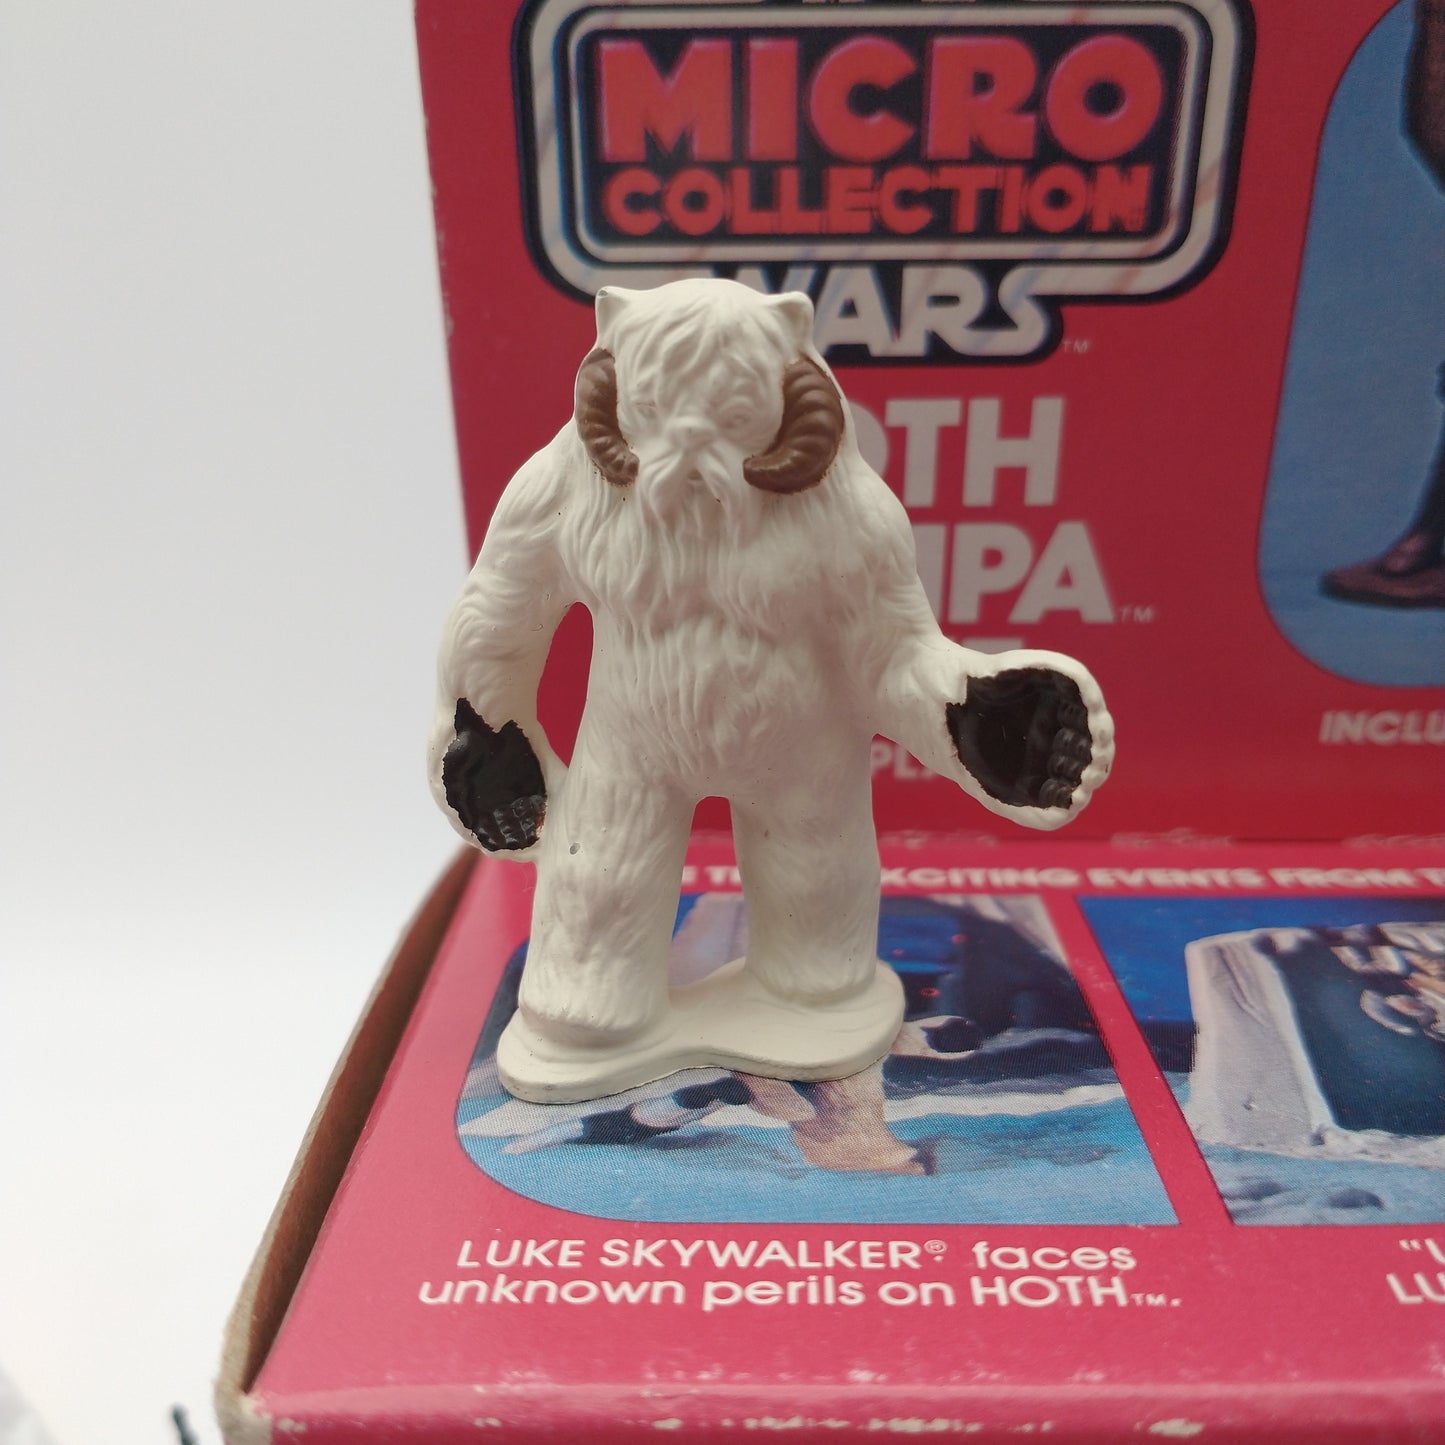 Star Wars Micro Collection Hoth Wampa Cave Action Playset 1982 Hasbro